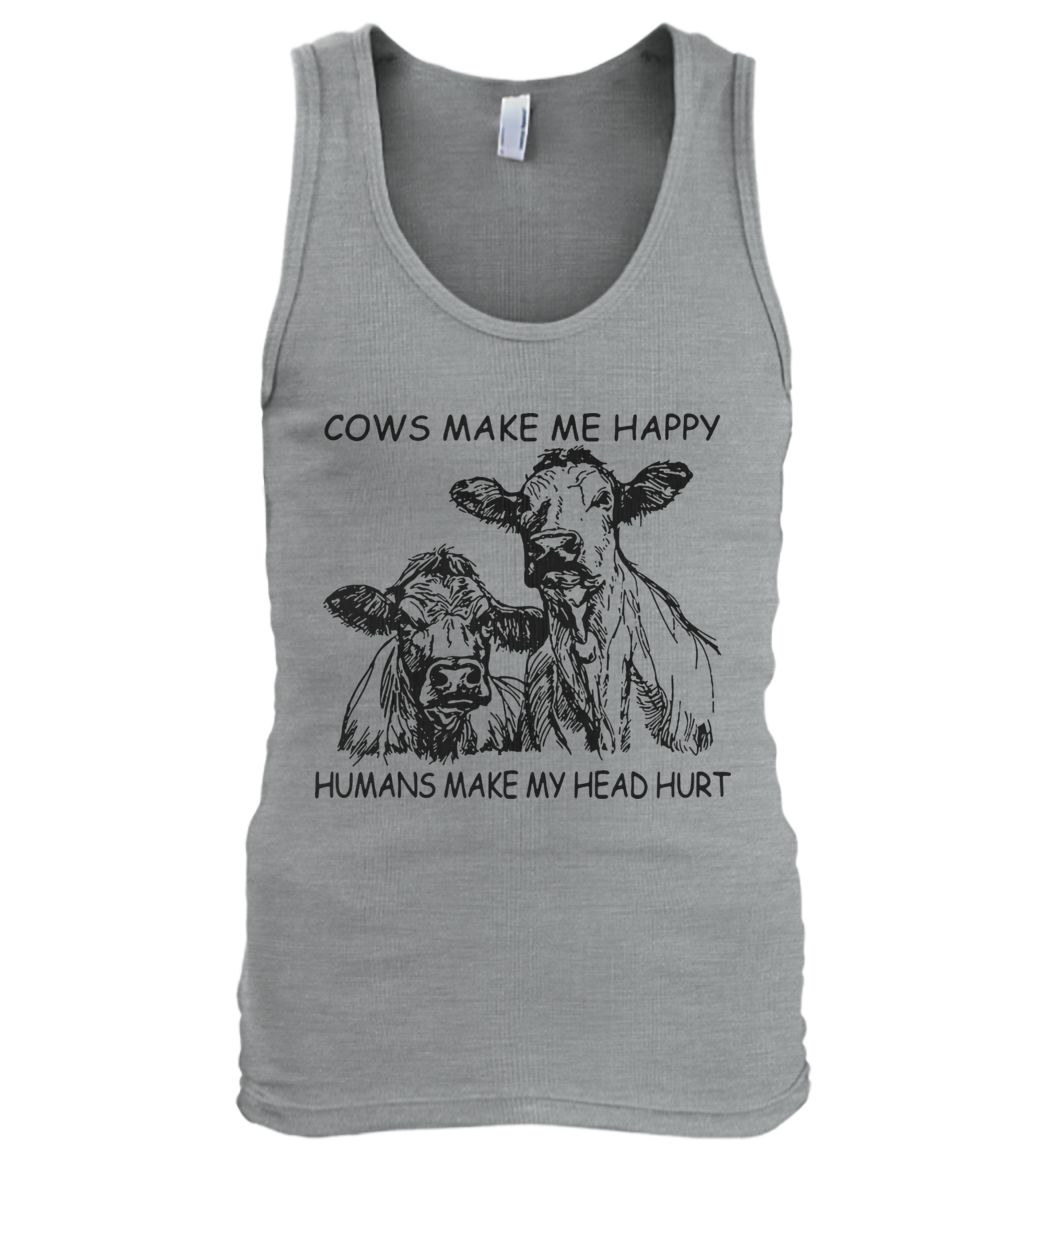 Cows make me happy humans make my head hurt men's tank top